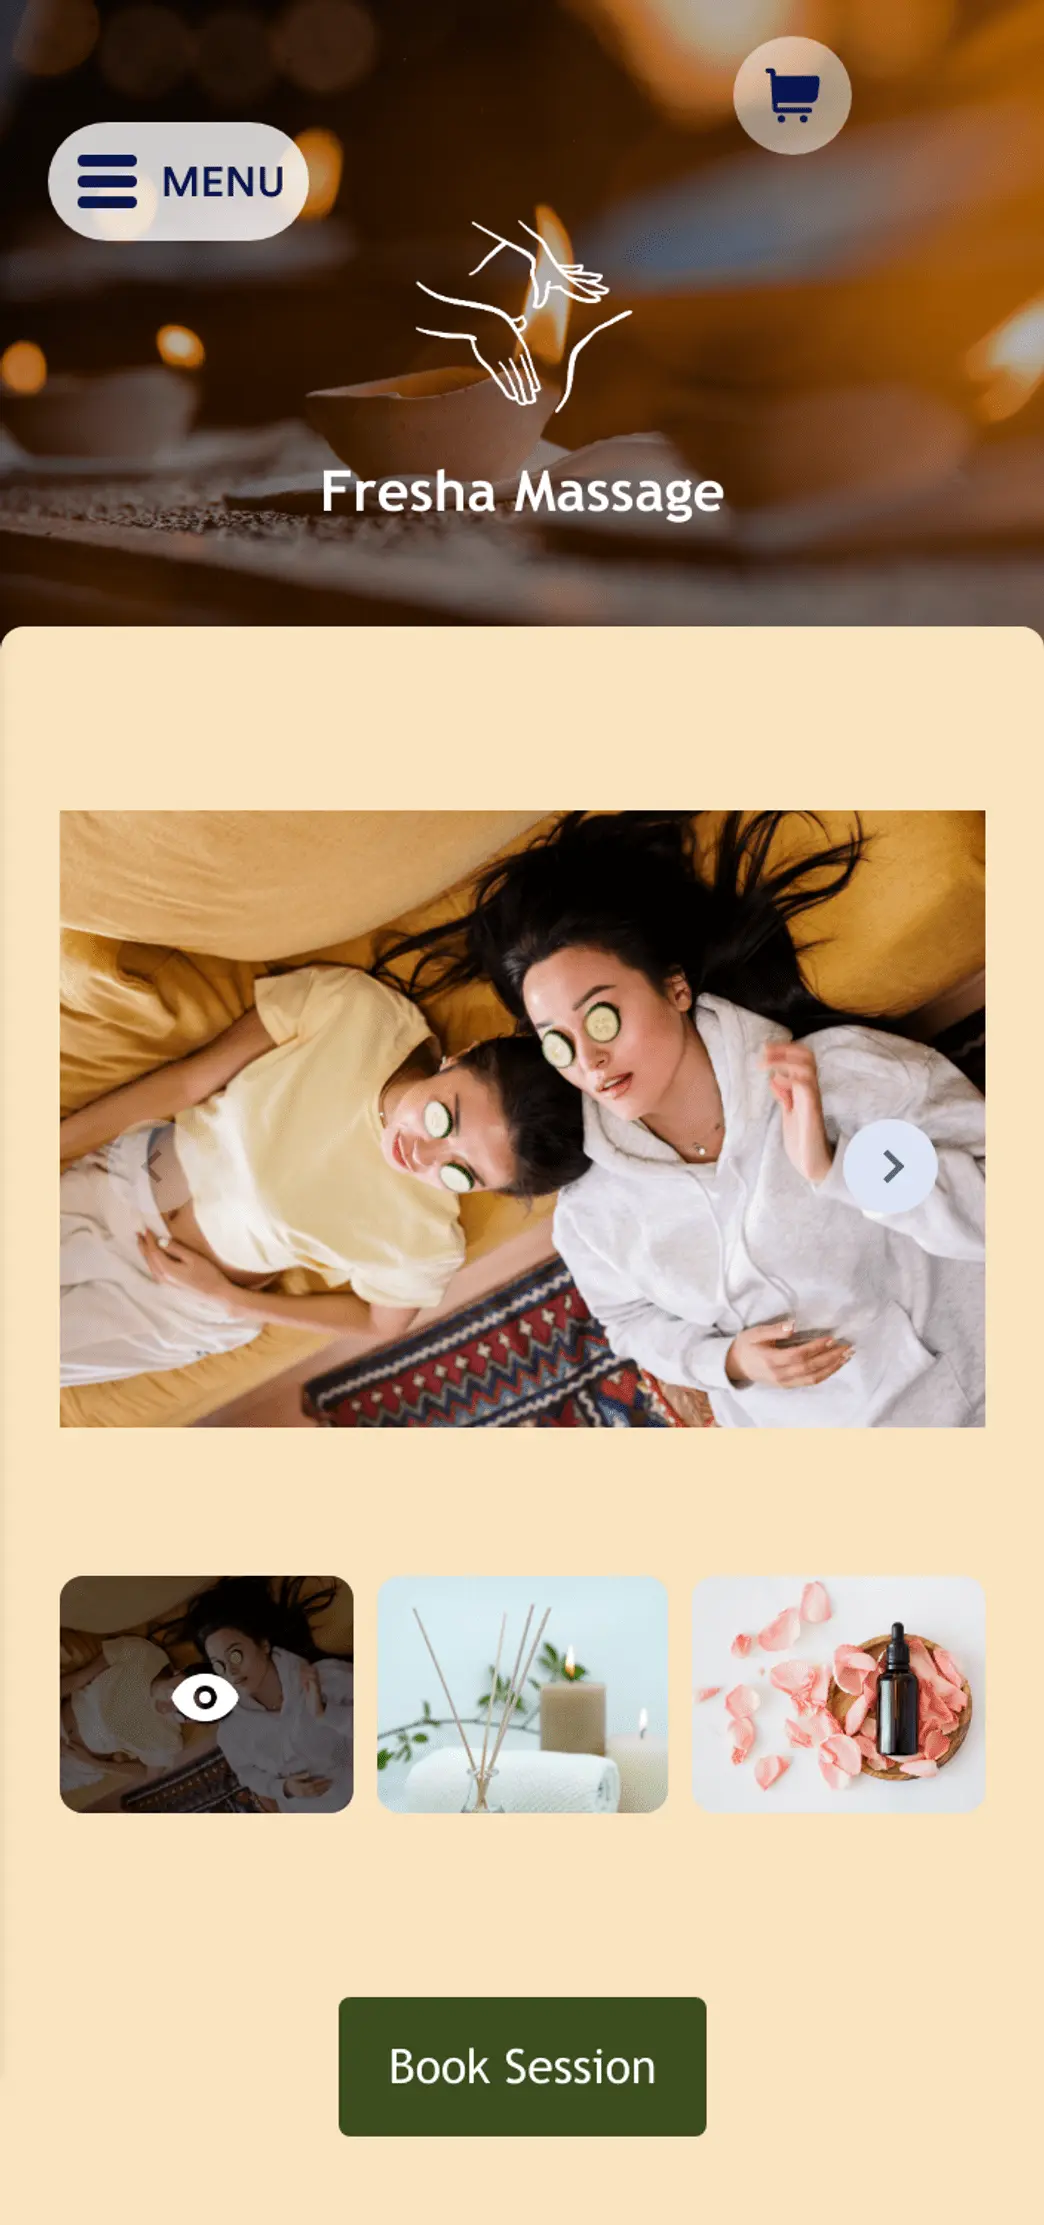 Massage Therapist Booking App